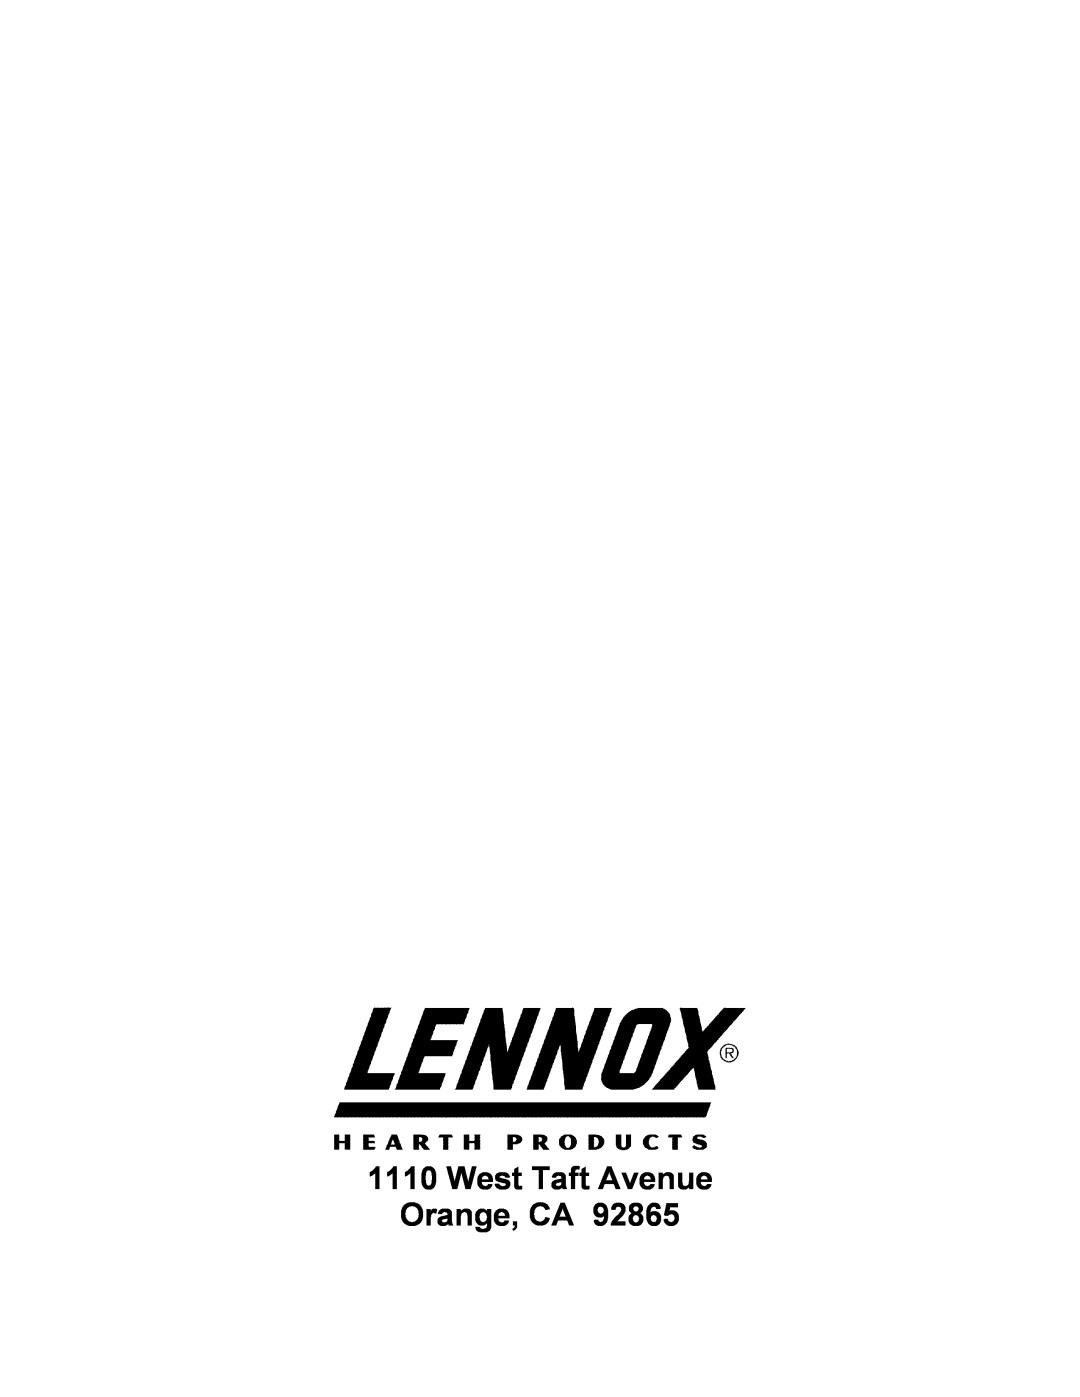 Lennox Hearth 1003C operation manual West Taft Avenue Orange, CA 